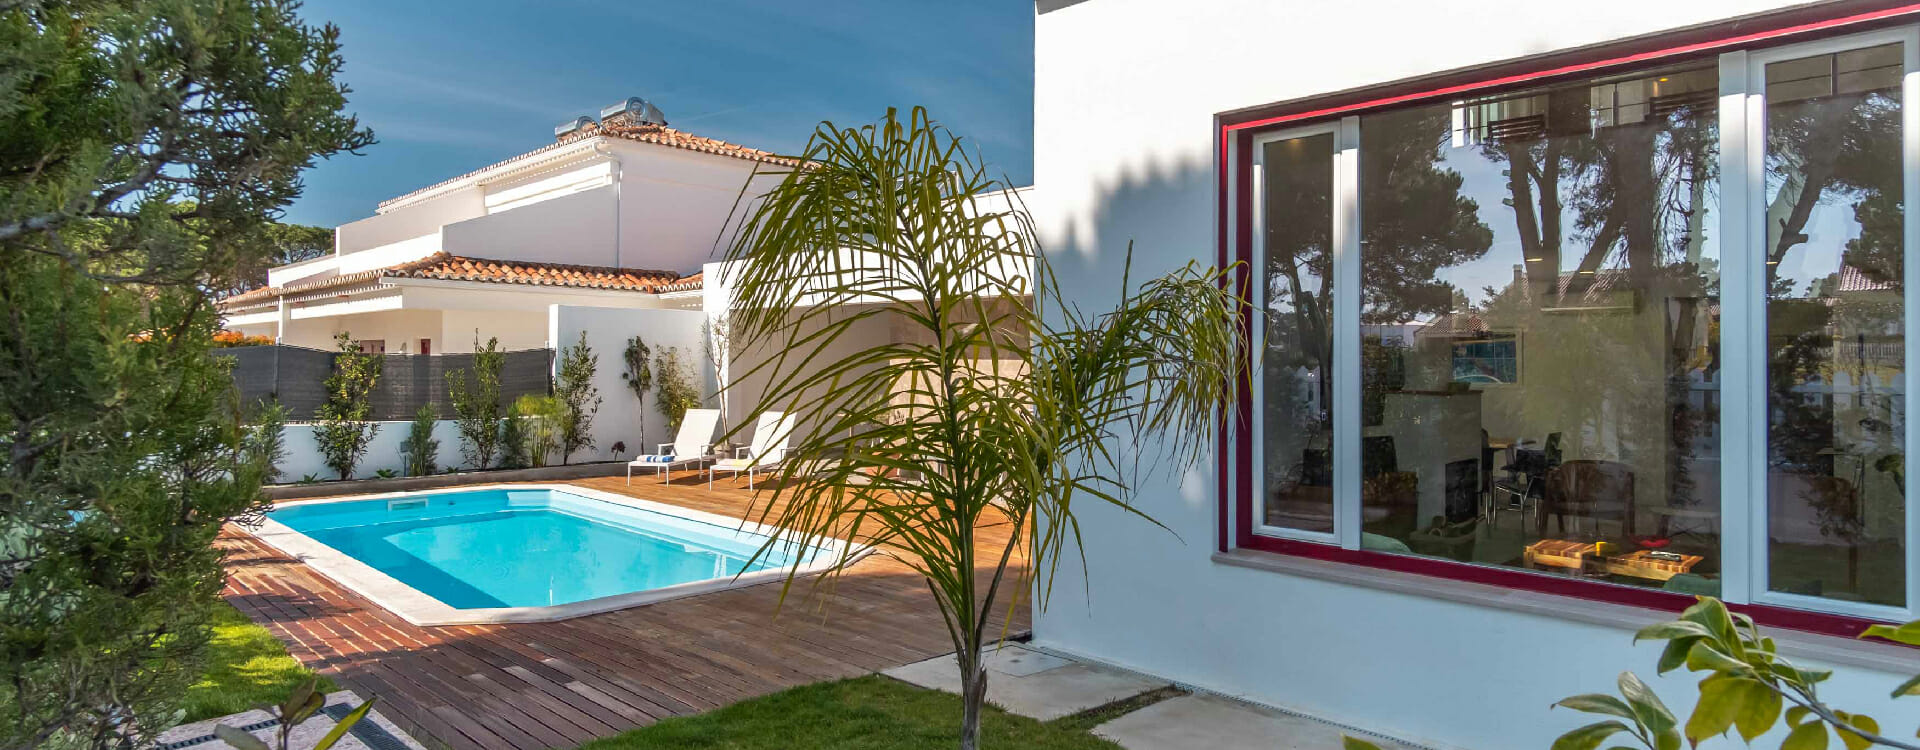 Premium Villa with pool near lisbon